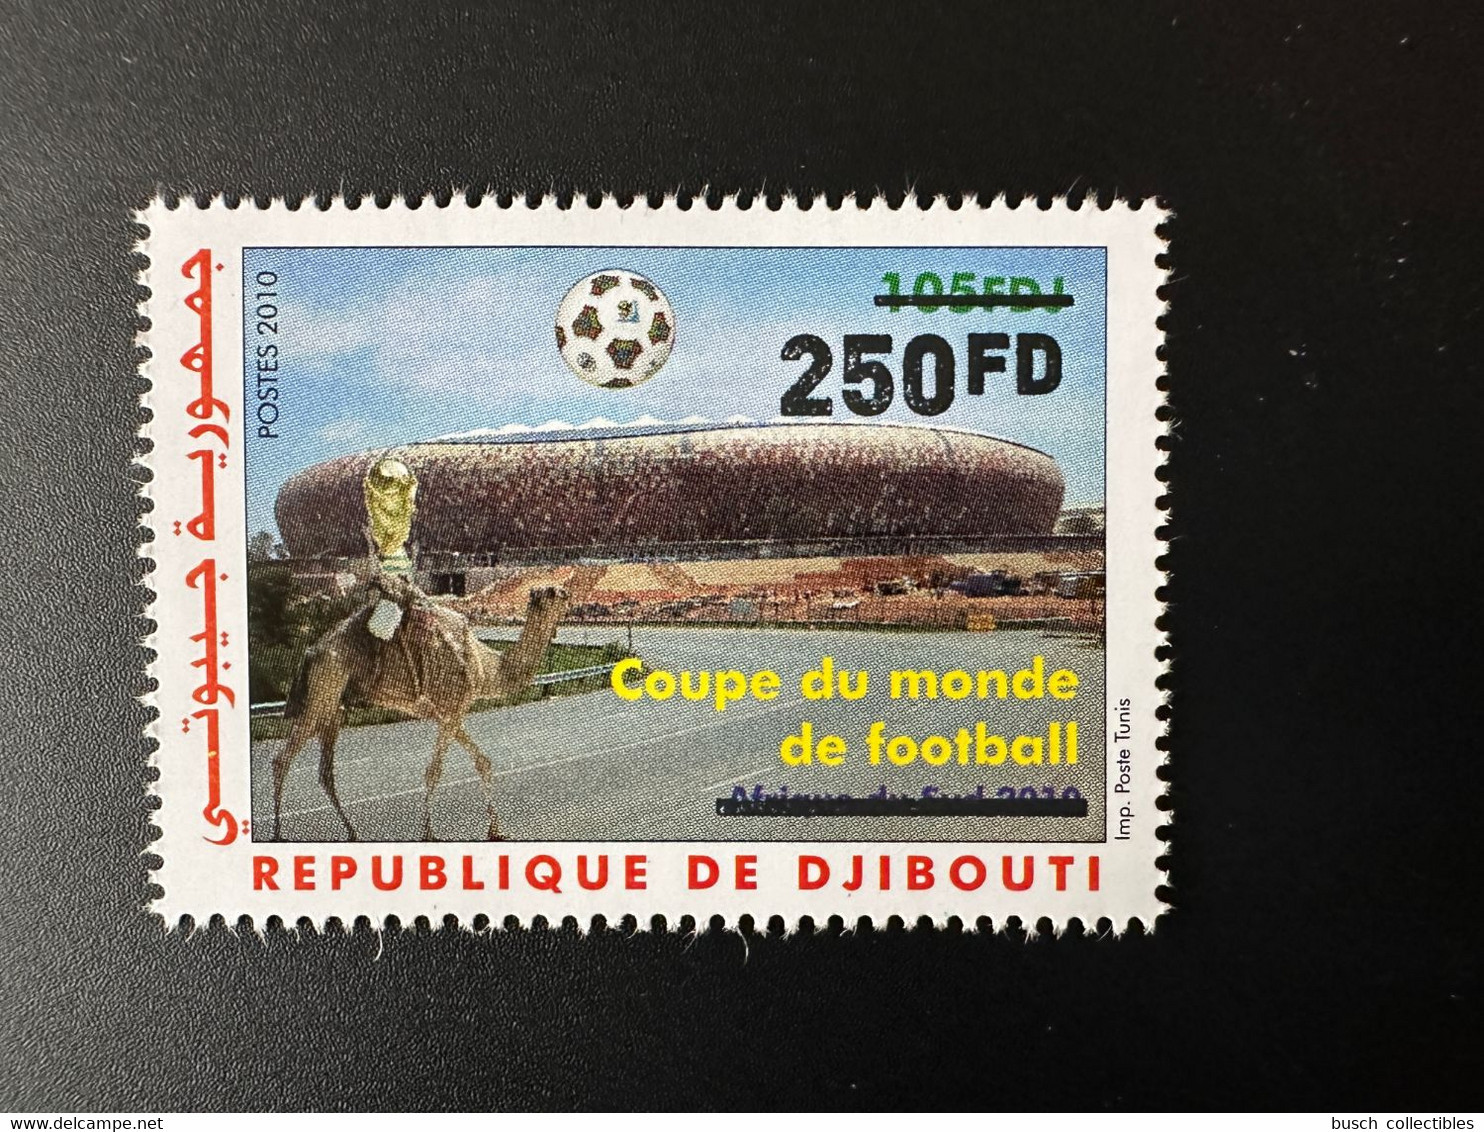 Djibouti Dschibuti 2022 Overprint Surchargé Mi. 814 FIFA World Cup Qatar Coupe Du Monde WM Football - 2022 – Qatar